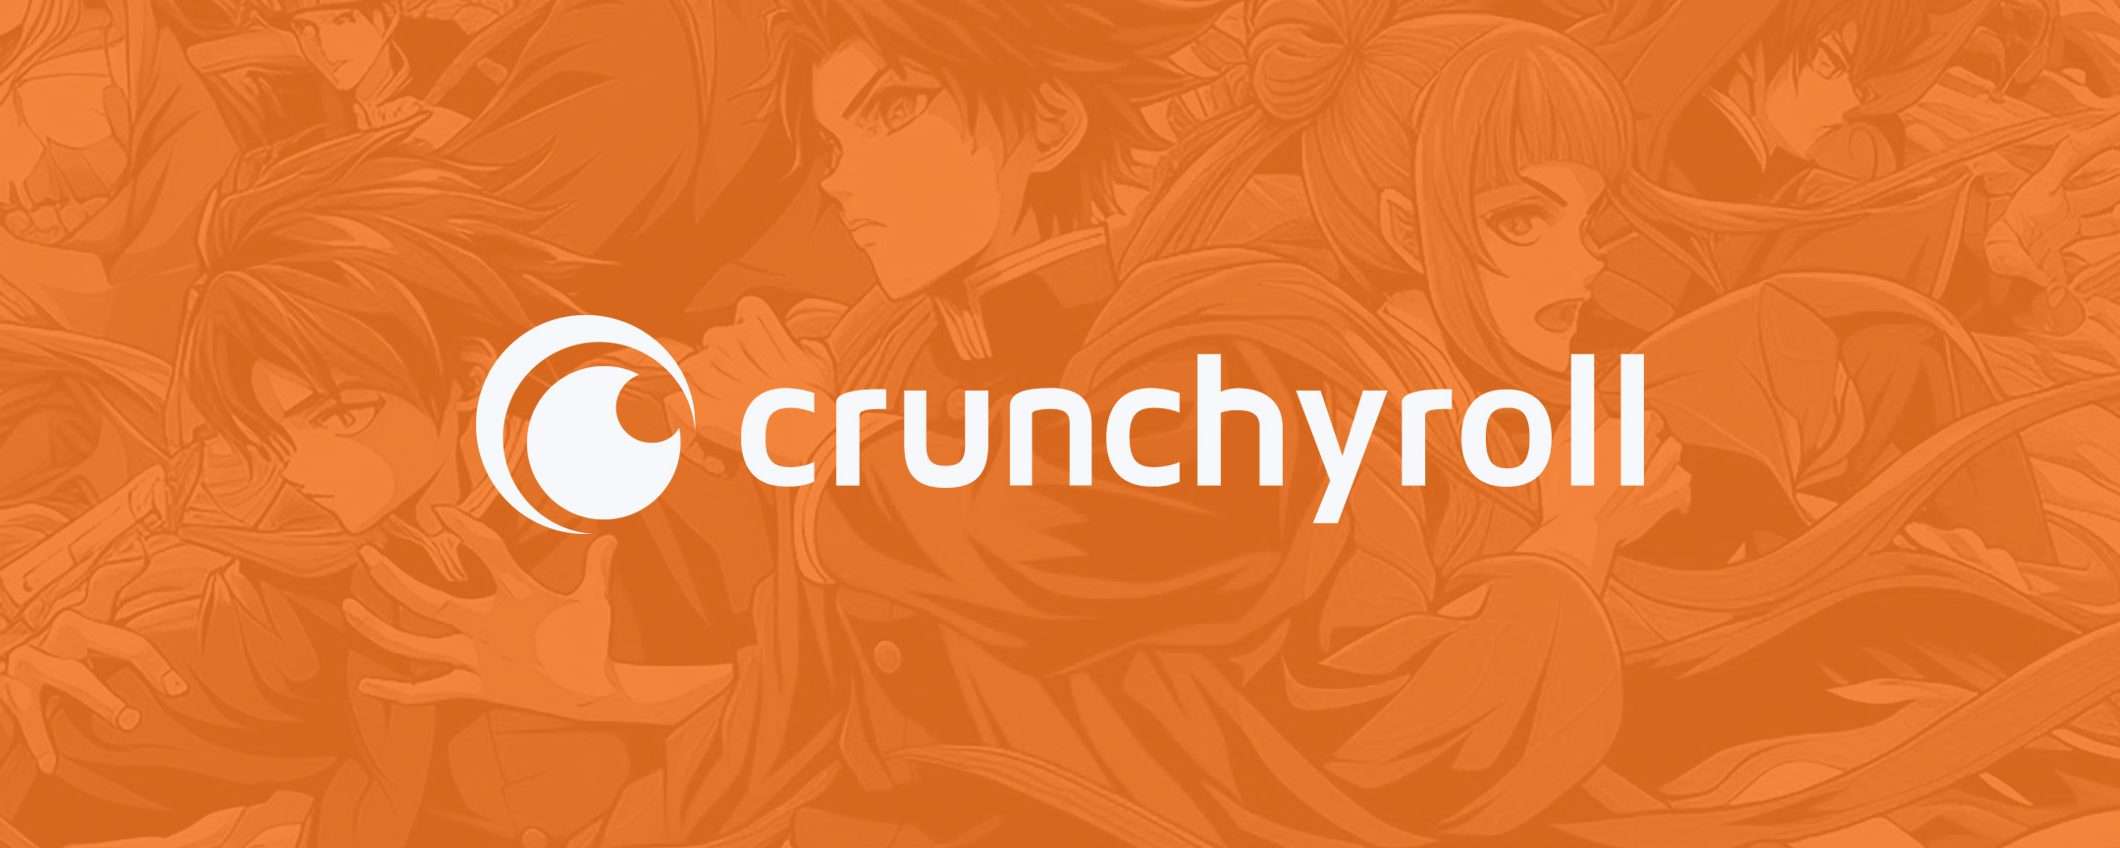 Crunchyroll aumenta i prezzi degli abbonamenti